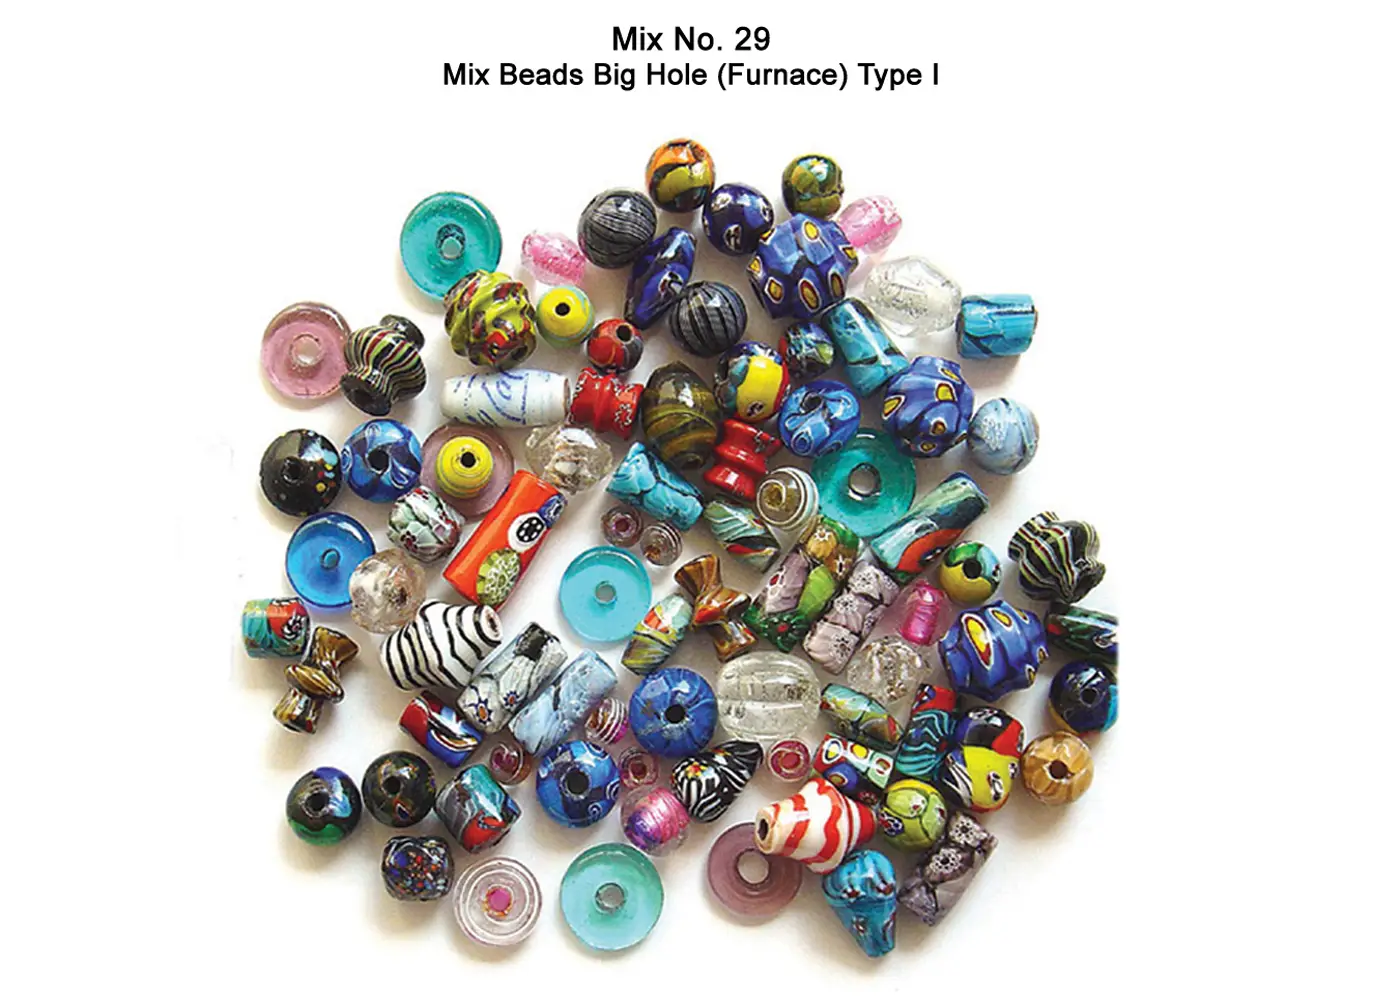 Mix Beads Big Hole (Furnace) Type I